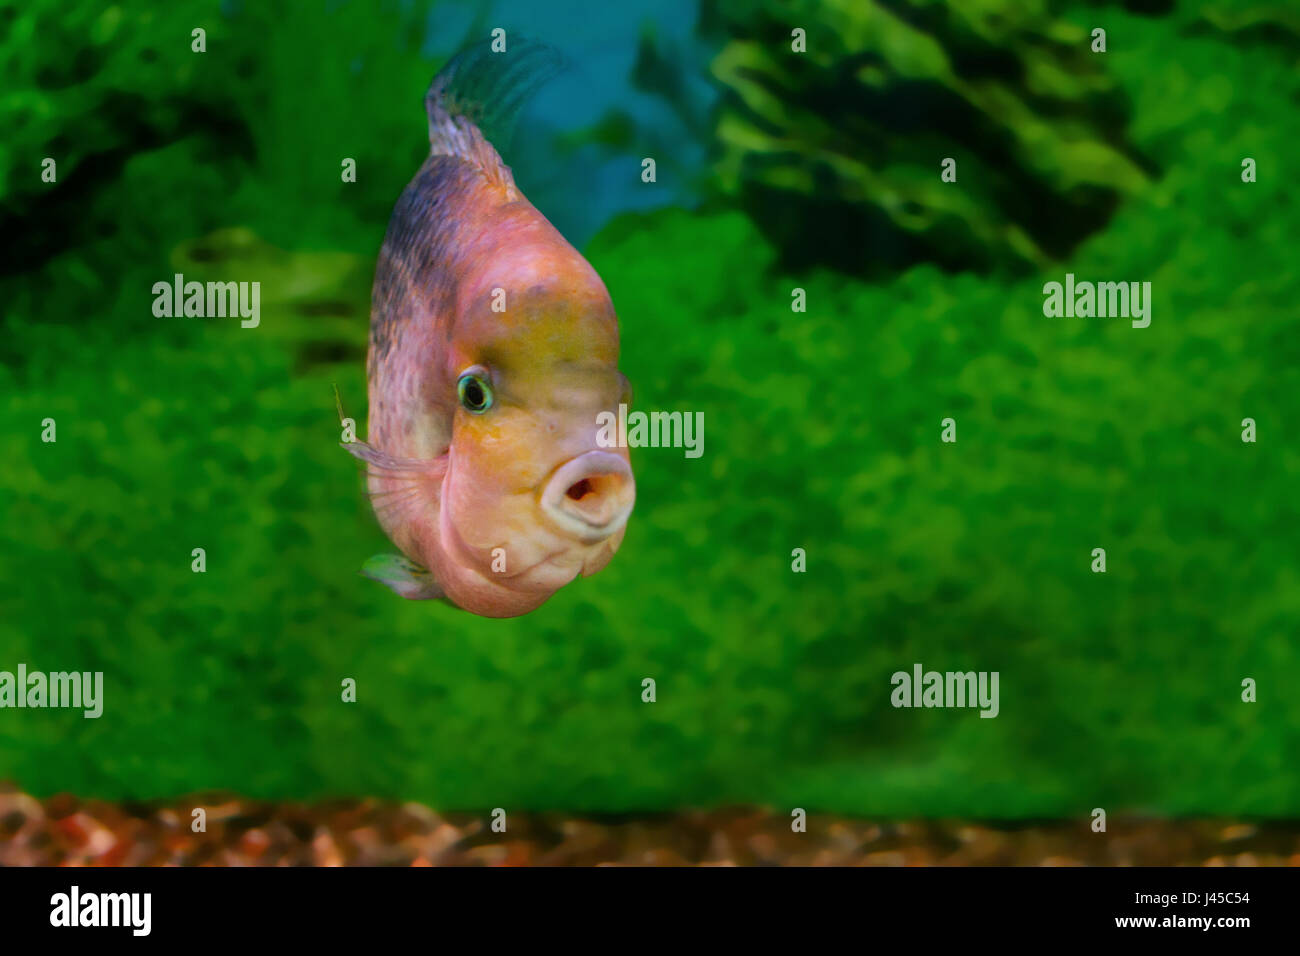 image of a beautiful aquarium fish Cichlasoma synspilum Stock Photo